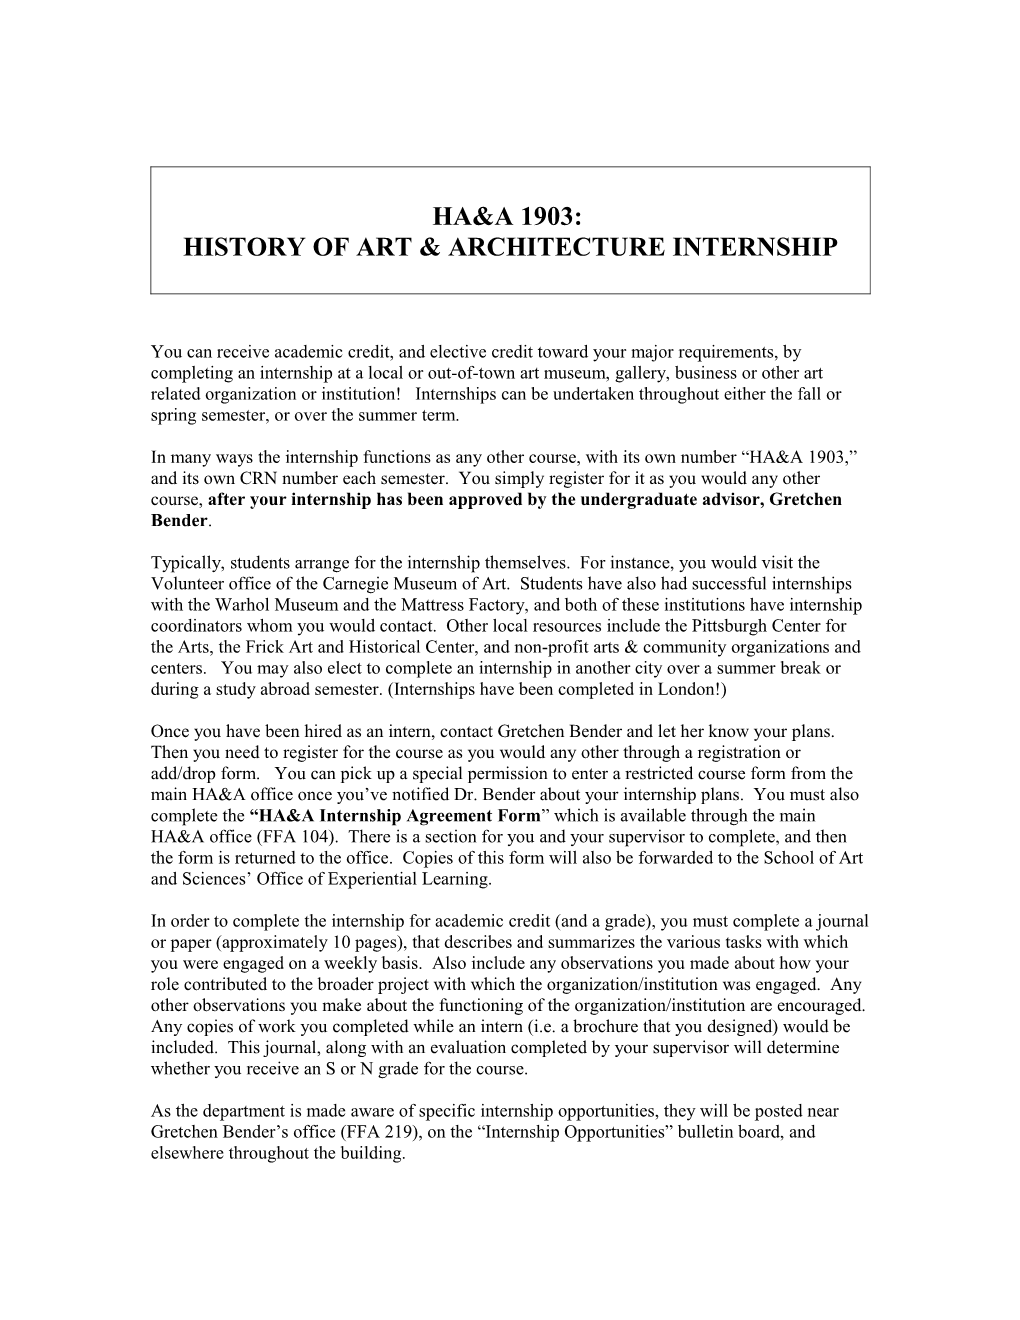 History of Art & Architecture Internship